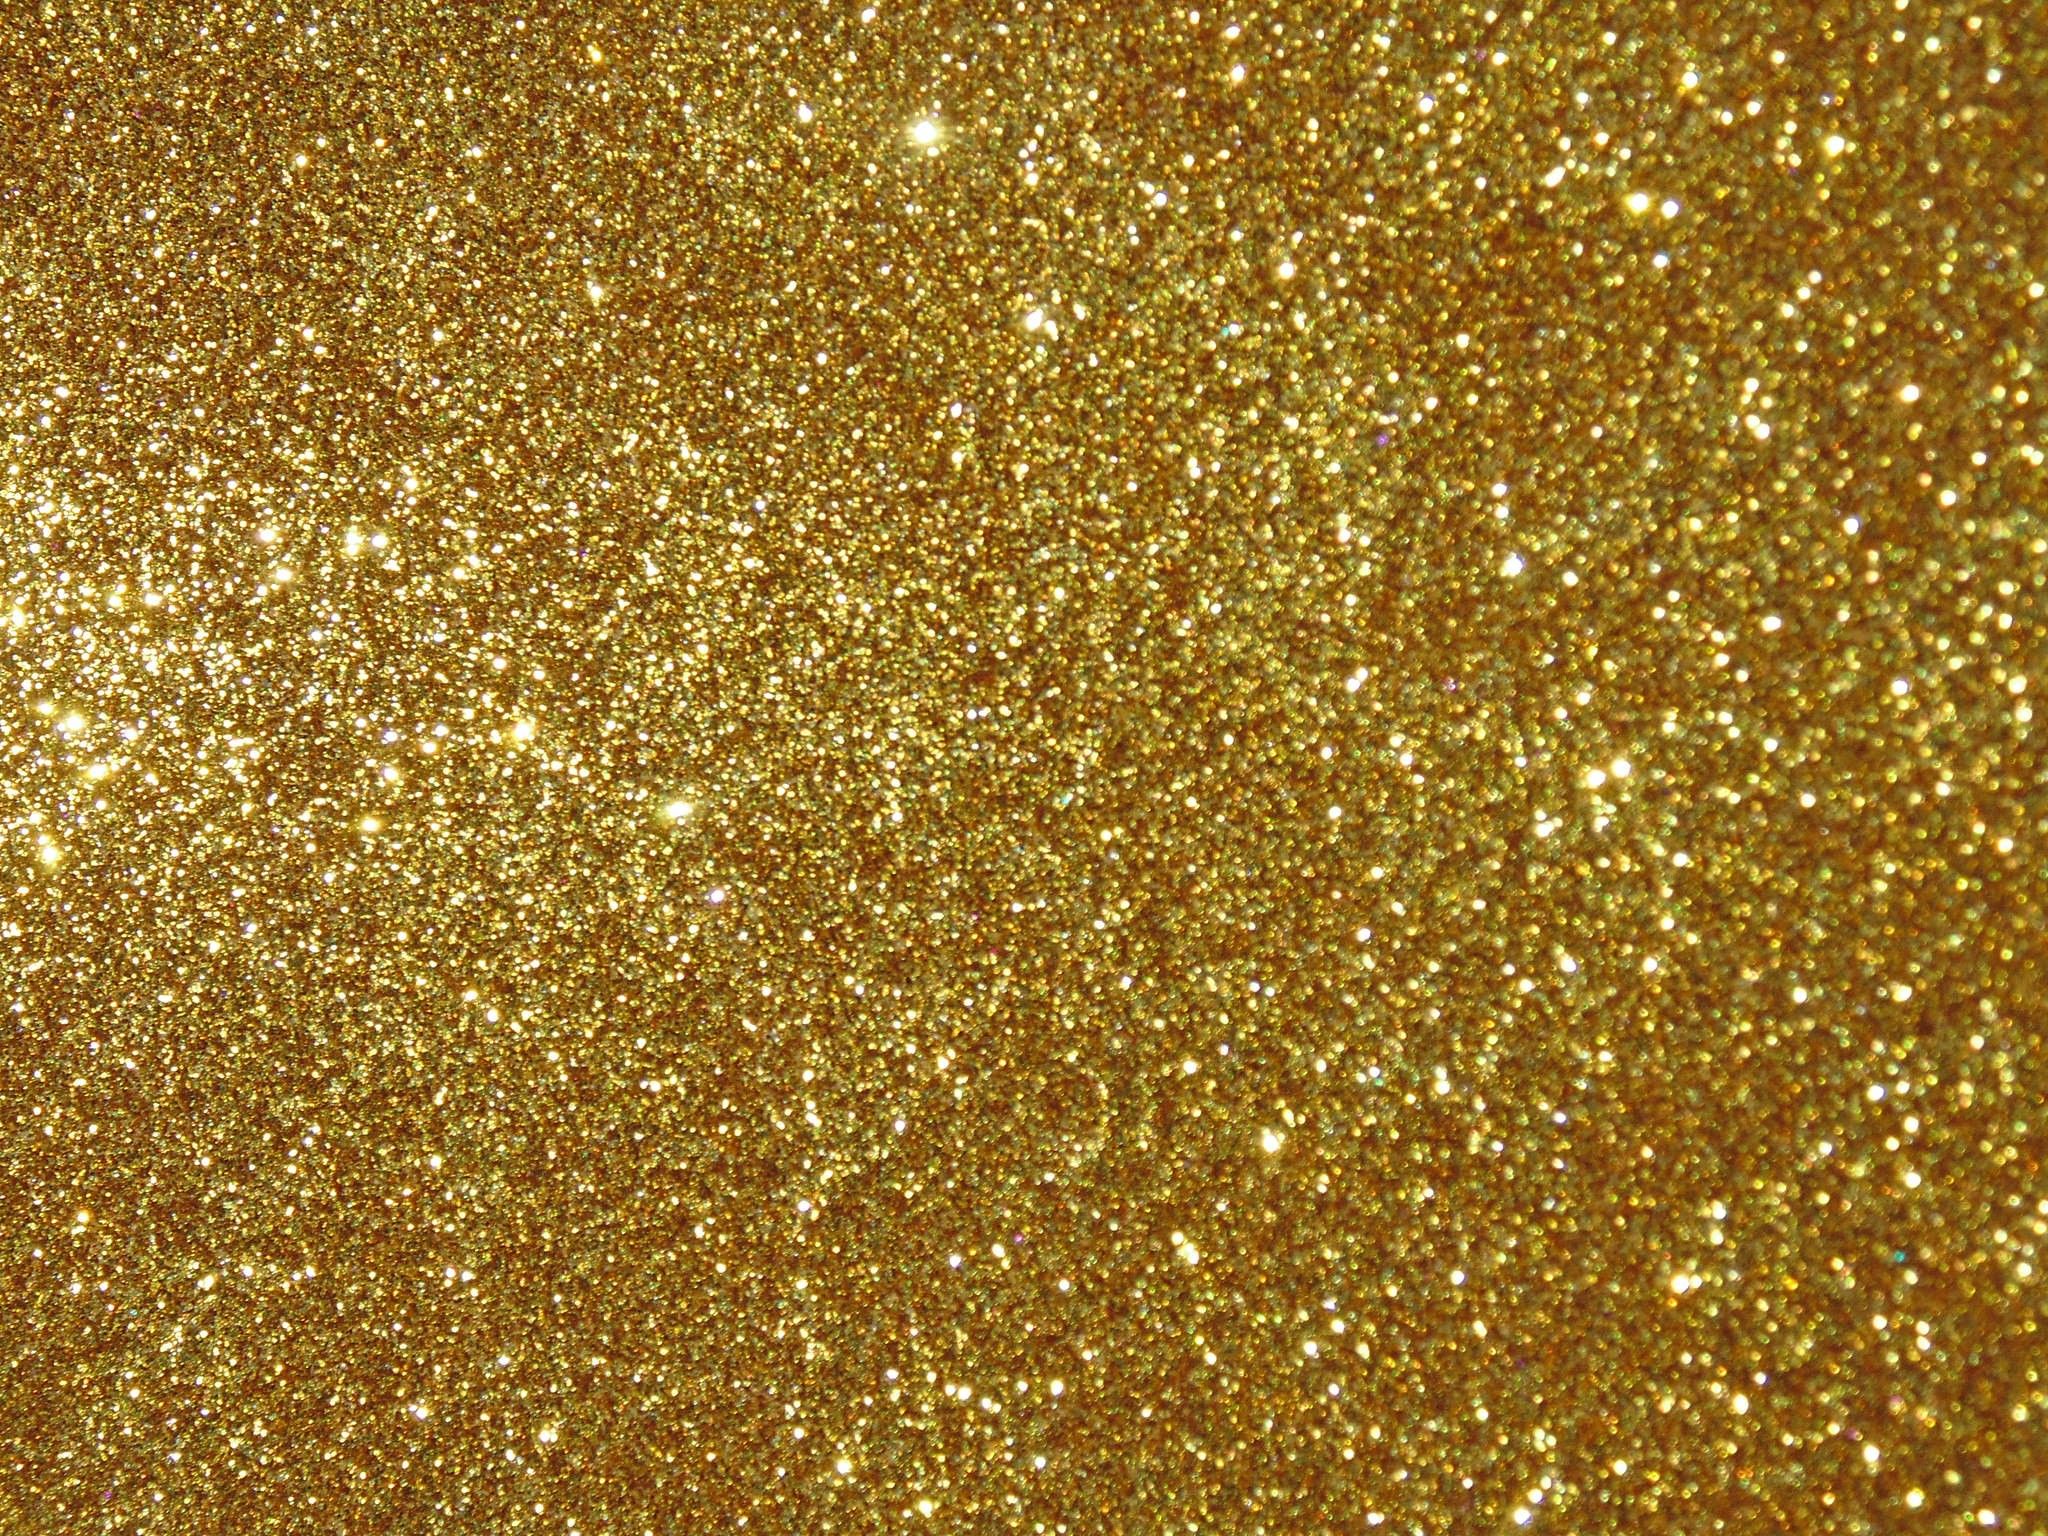 Gold Glitter Wallpaper HD Picture Desktop Cool Image Free 4k Amazing Smart Phones Colourful Widescreen 1080p 2048x1536. Full HD Wallpaper